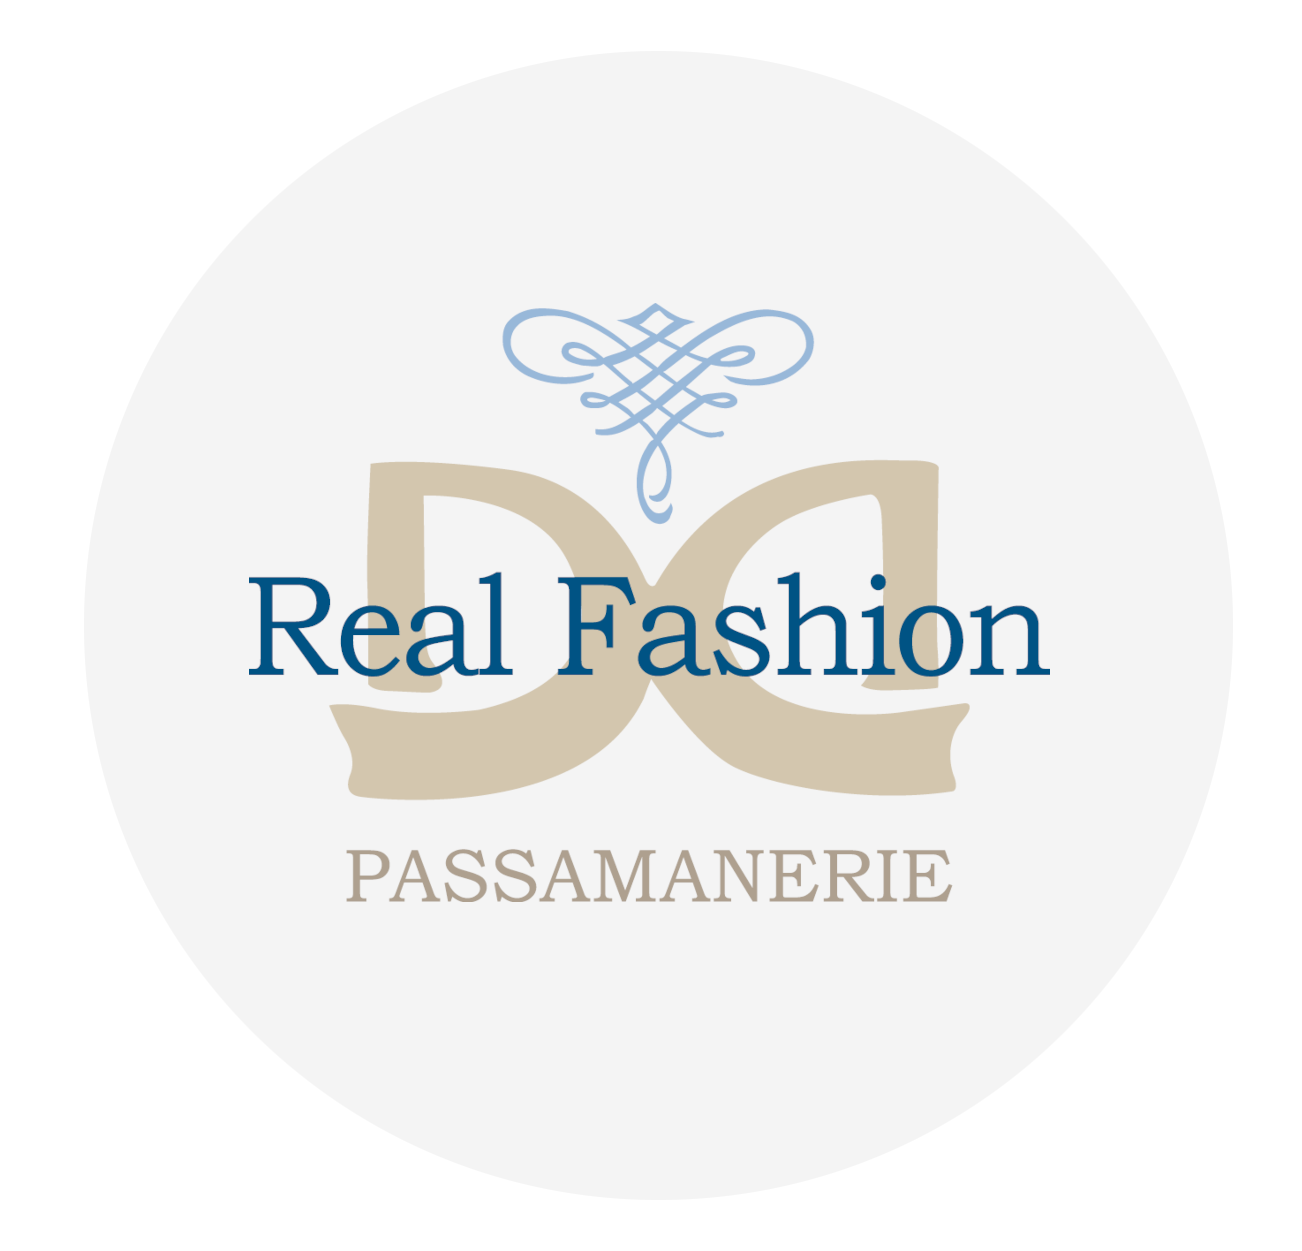 Real Fashion - Pizzi e Passamanerie